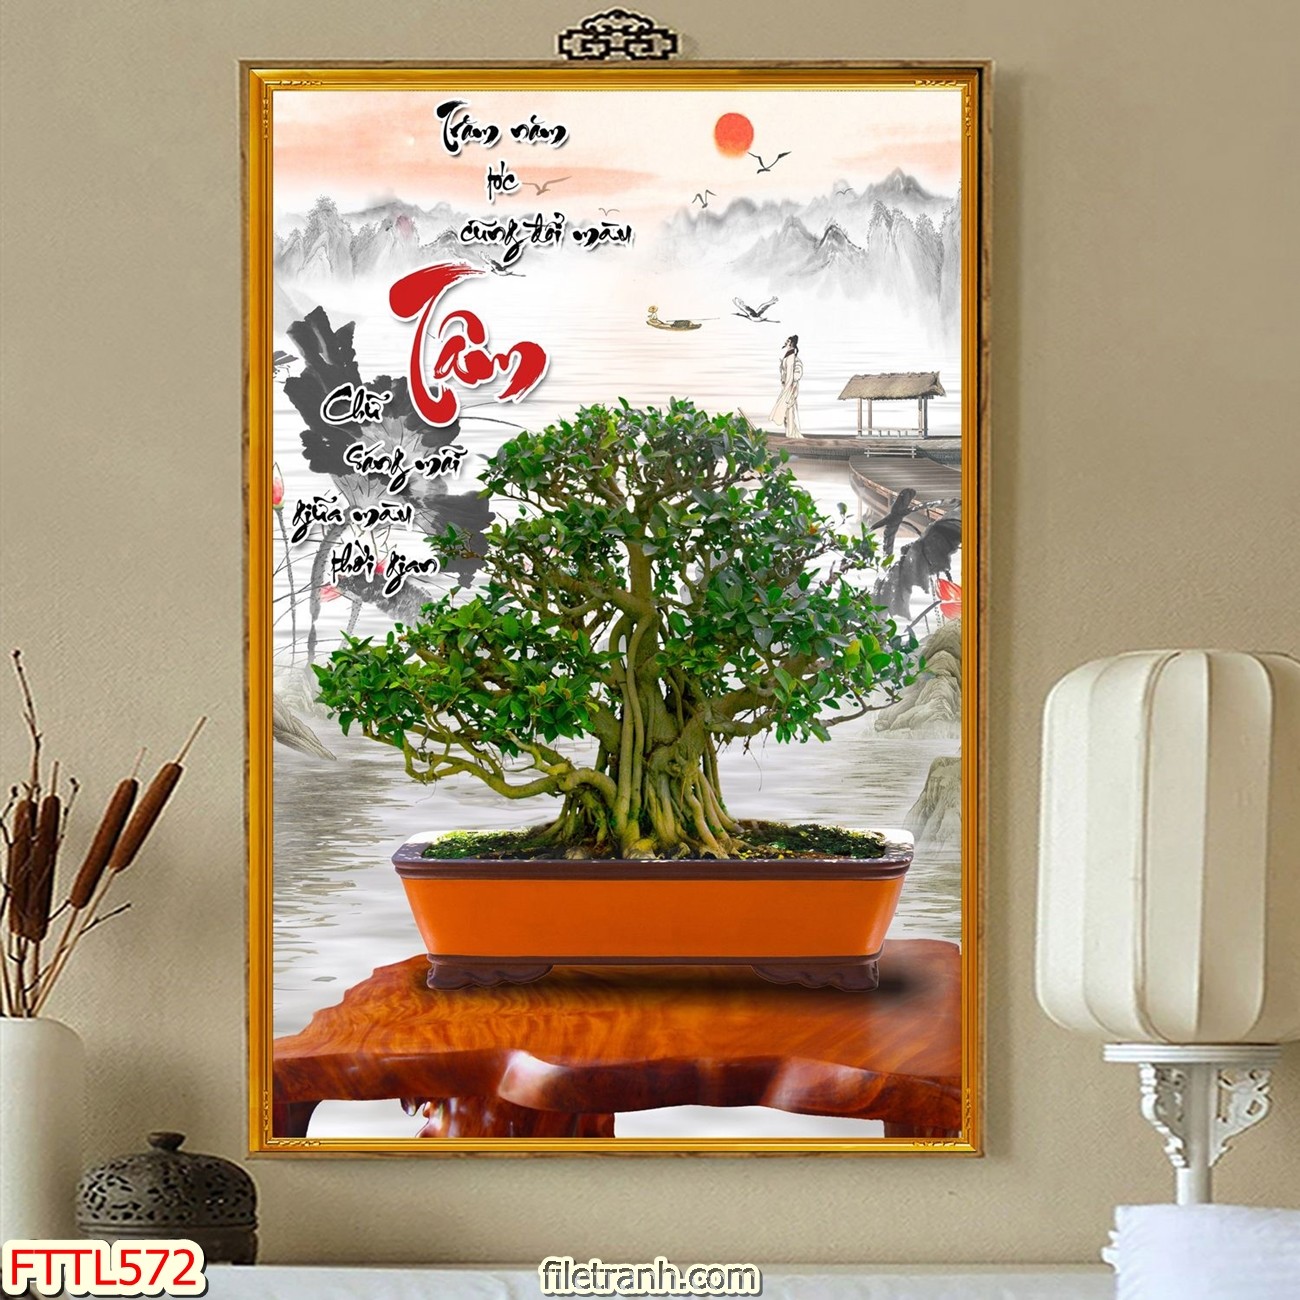 https://filetranh.com/file-tranh-chau-mai-bonsai/file-tranh-chau-mai-bonsai-fttl572.html